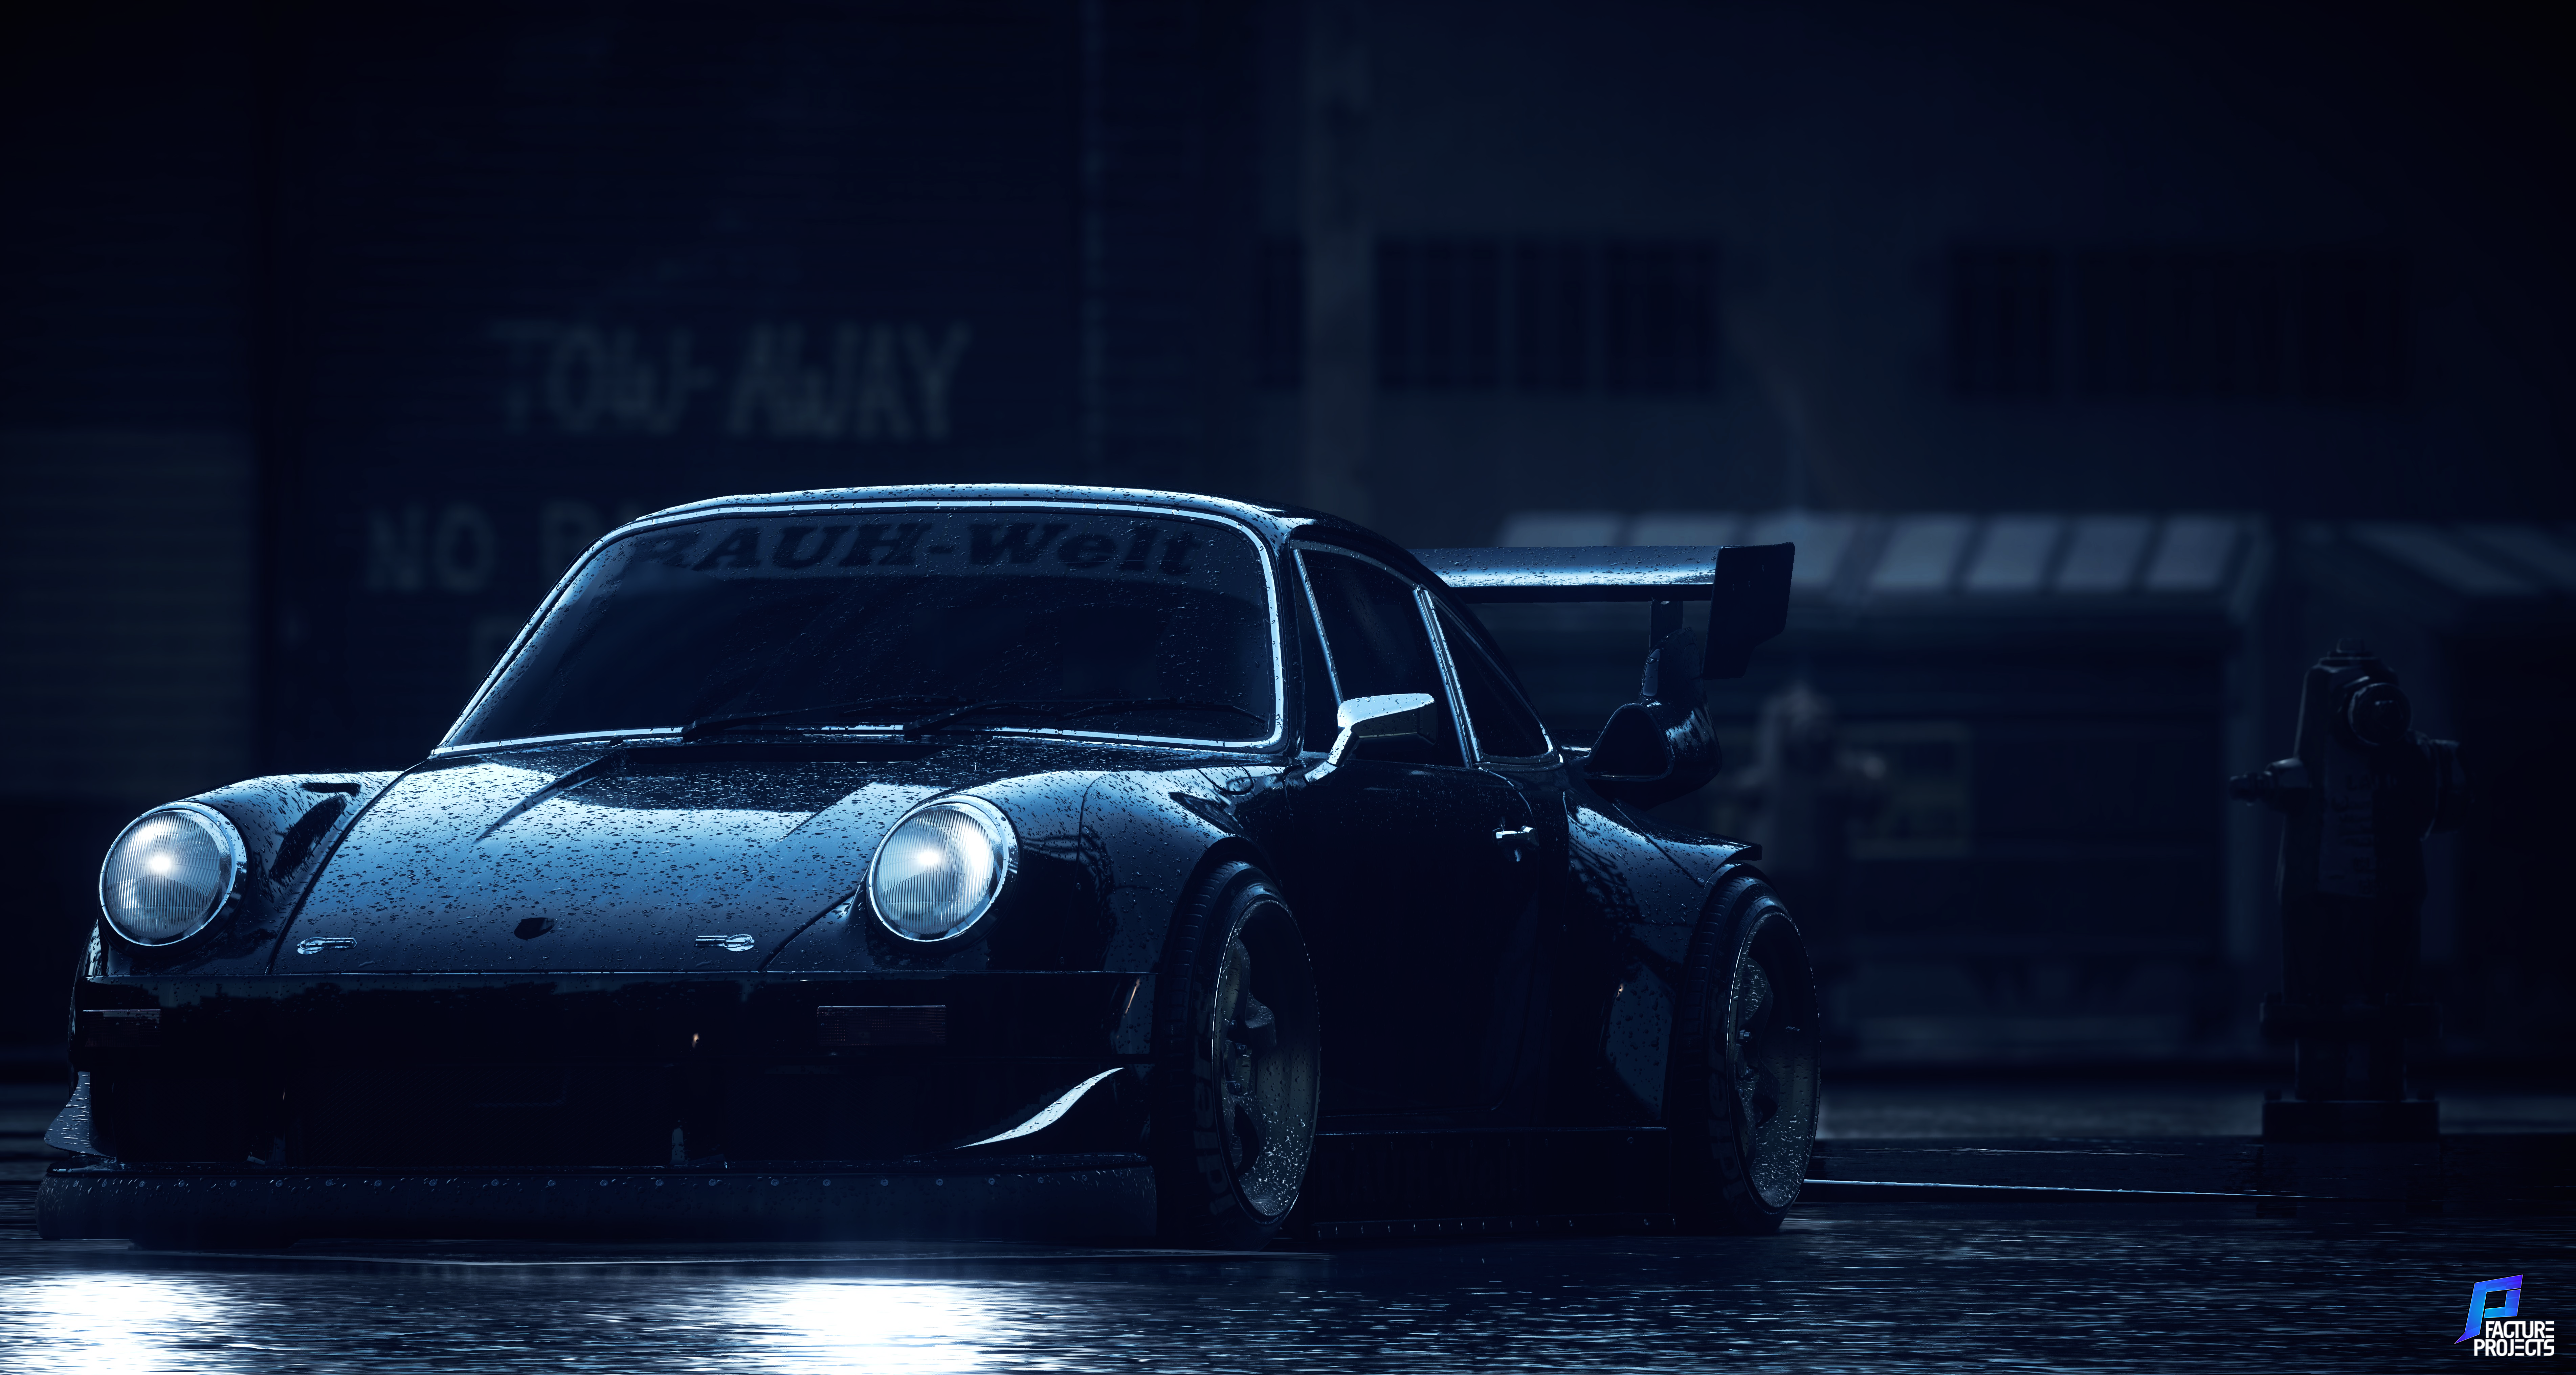 Porsche 911 Porsche Black Car Need For Speed Need For Speed 2015 NFS 2015 7612x4064